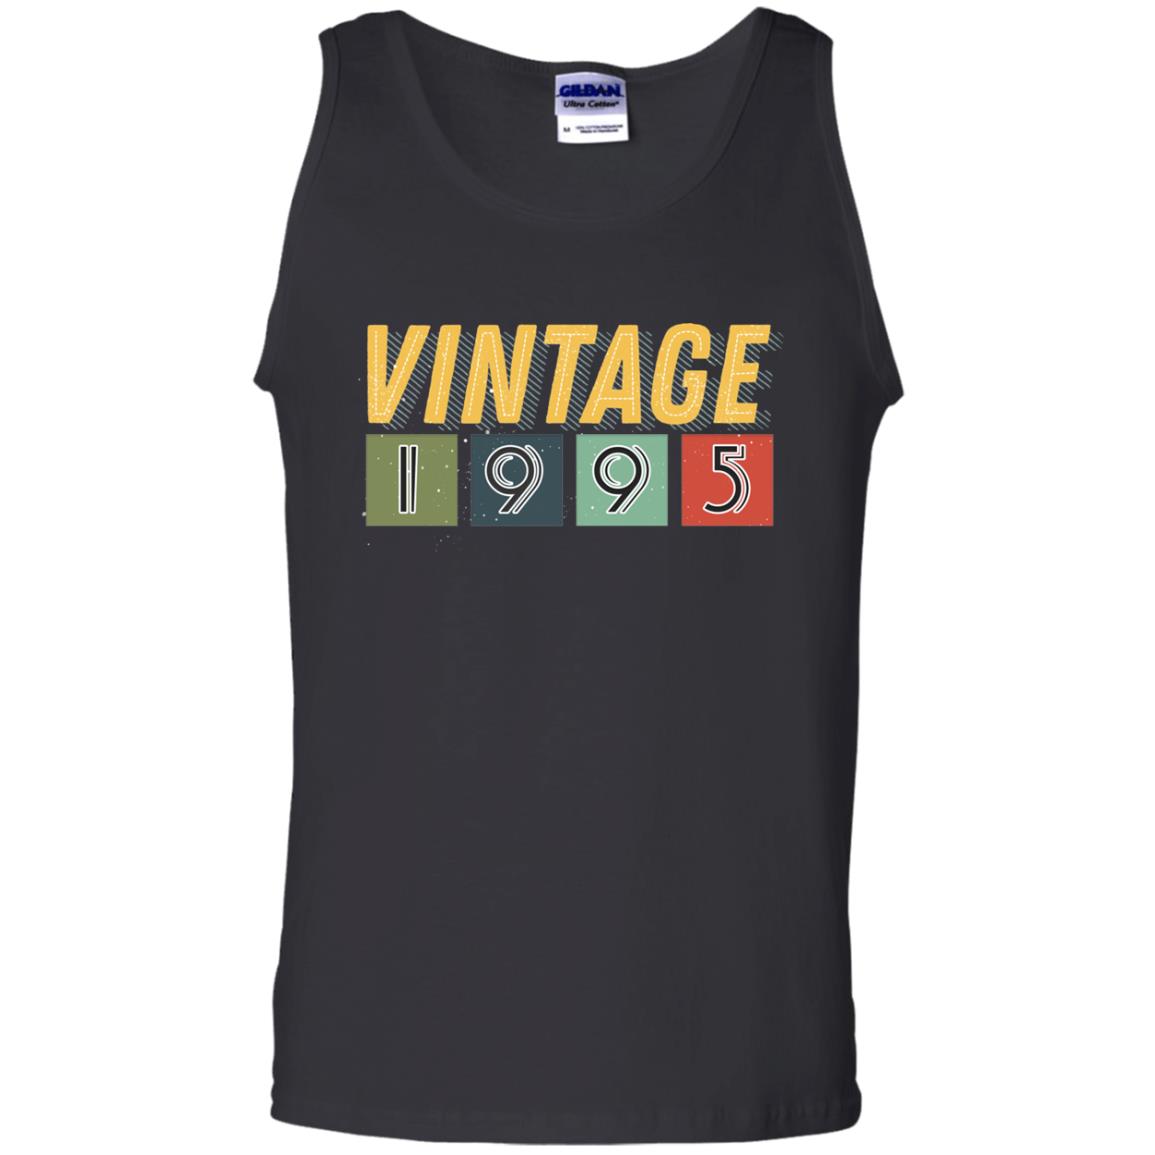 Vintage 1995 23th Birthday Gift Shirt For Mens Or WomensG220 Gildan 100% Cotton Tank Top